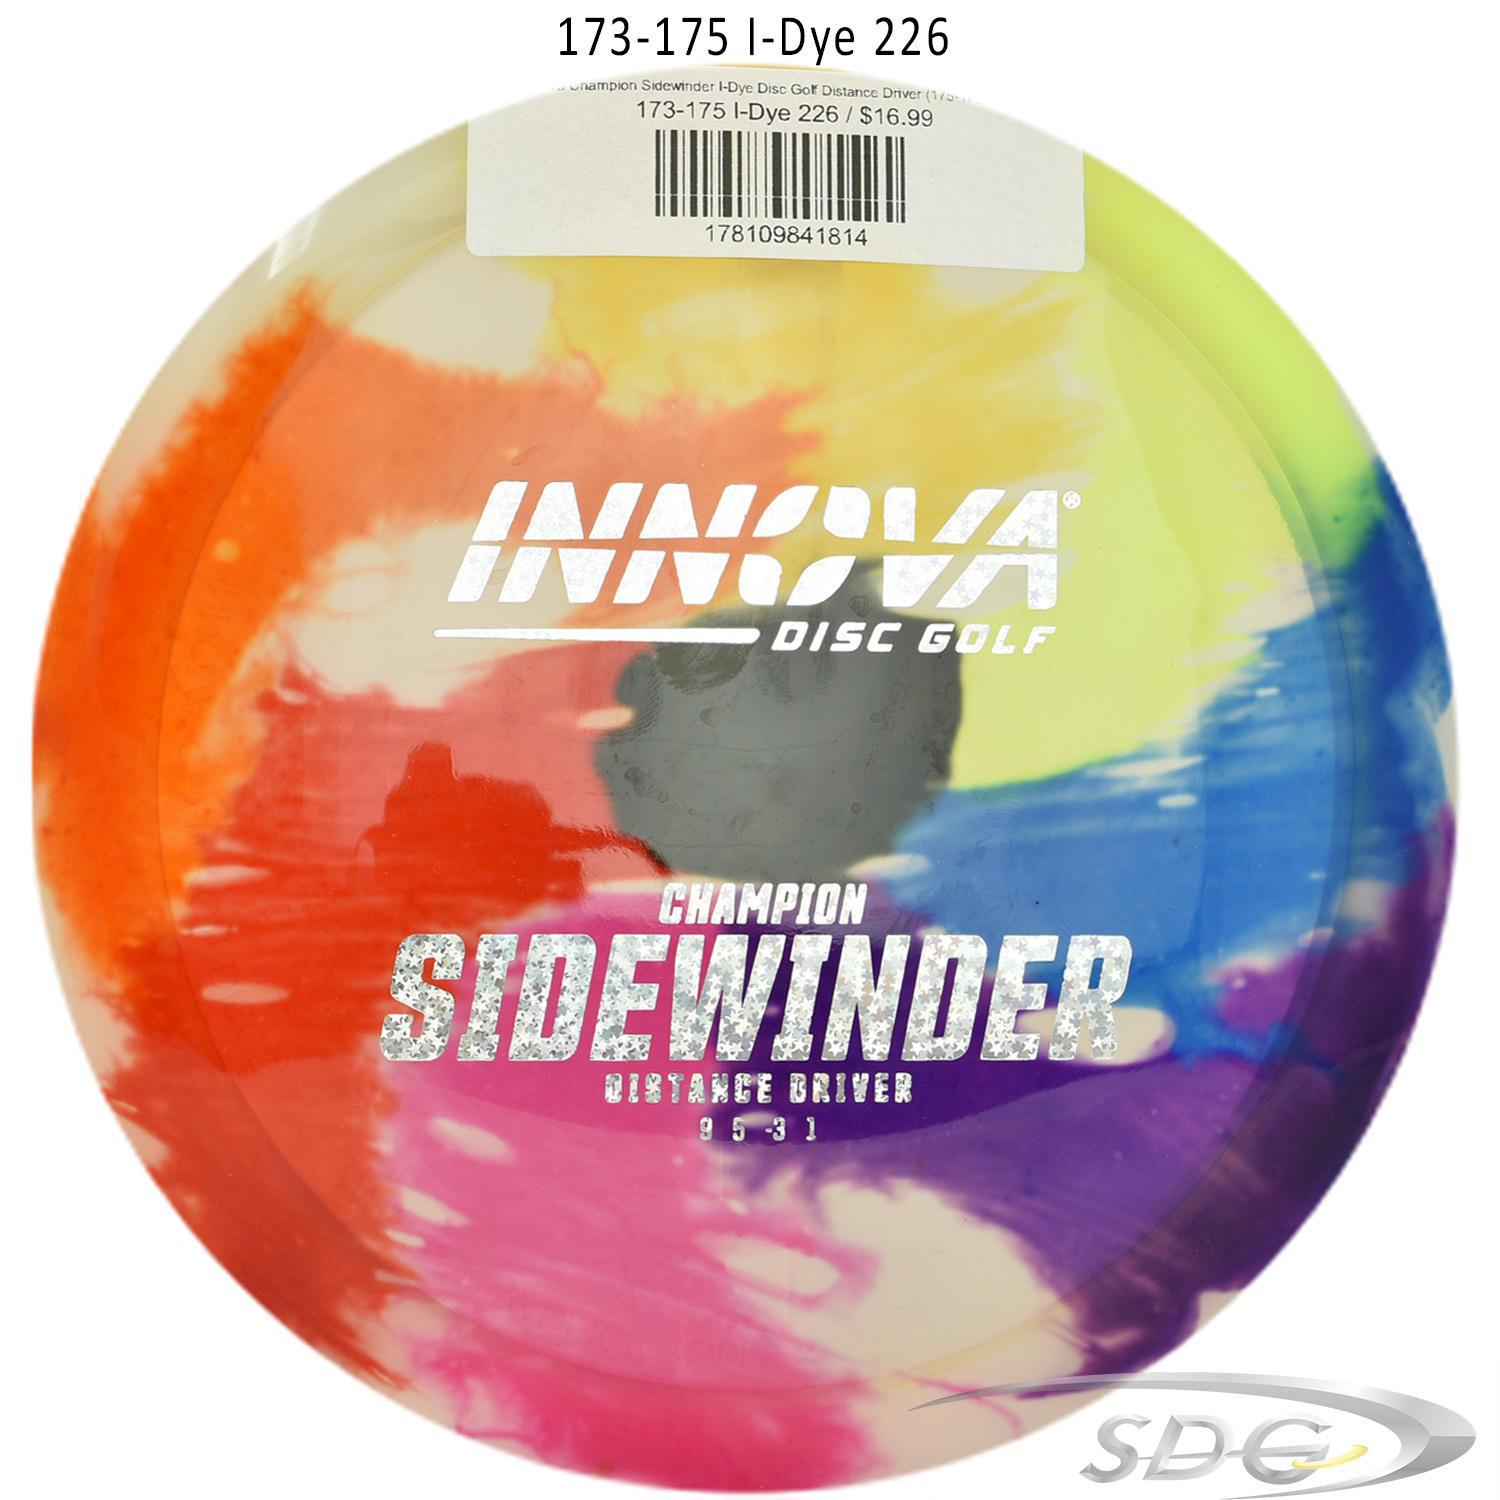 innova-champion-sidewinder-i-dye-disc-golf-distance-driver 173-175 I-Dye 226 